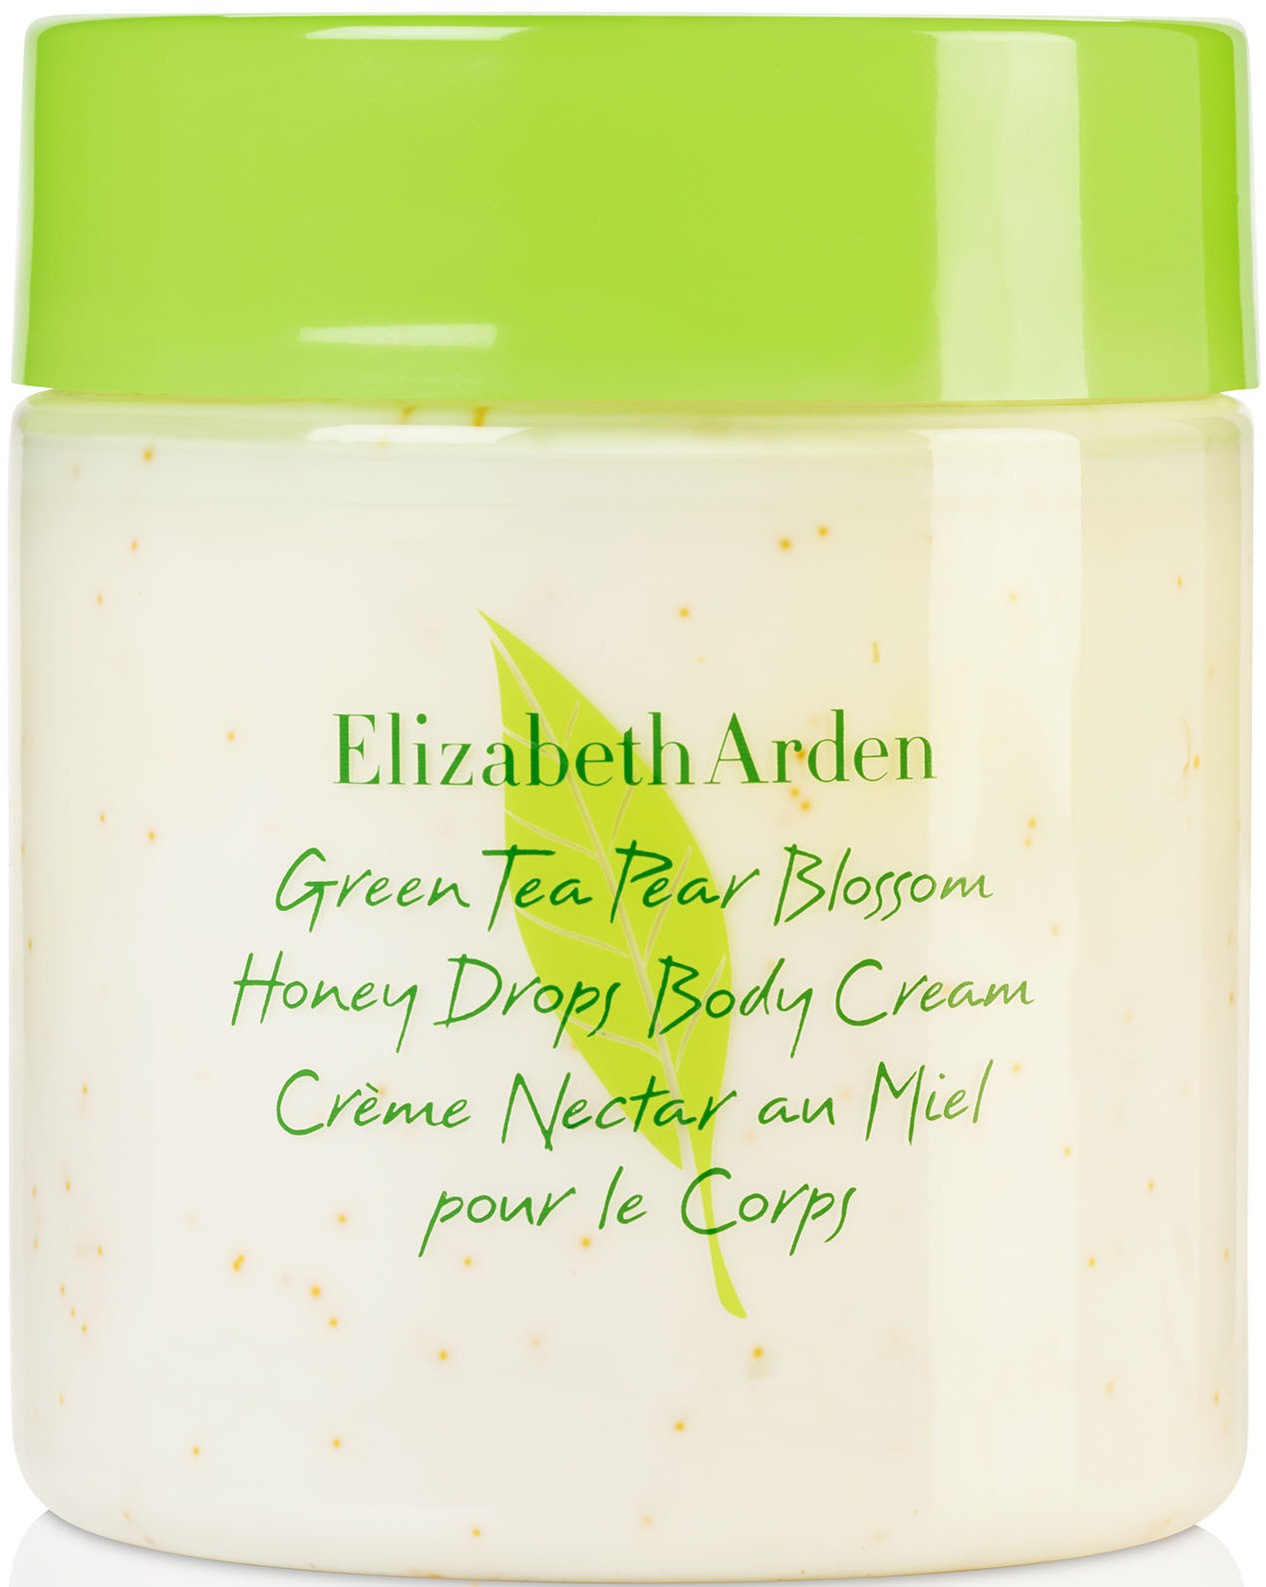 Elizabeth Arden Green Tea Pear Blossom Honey Drops Body Cream